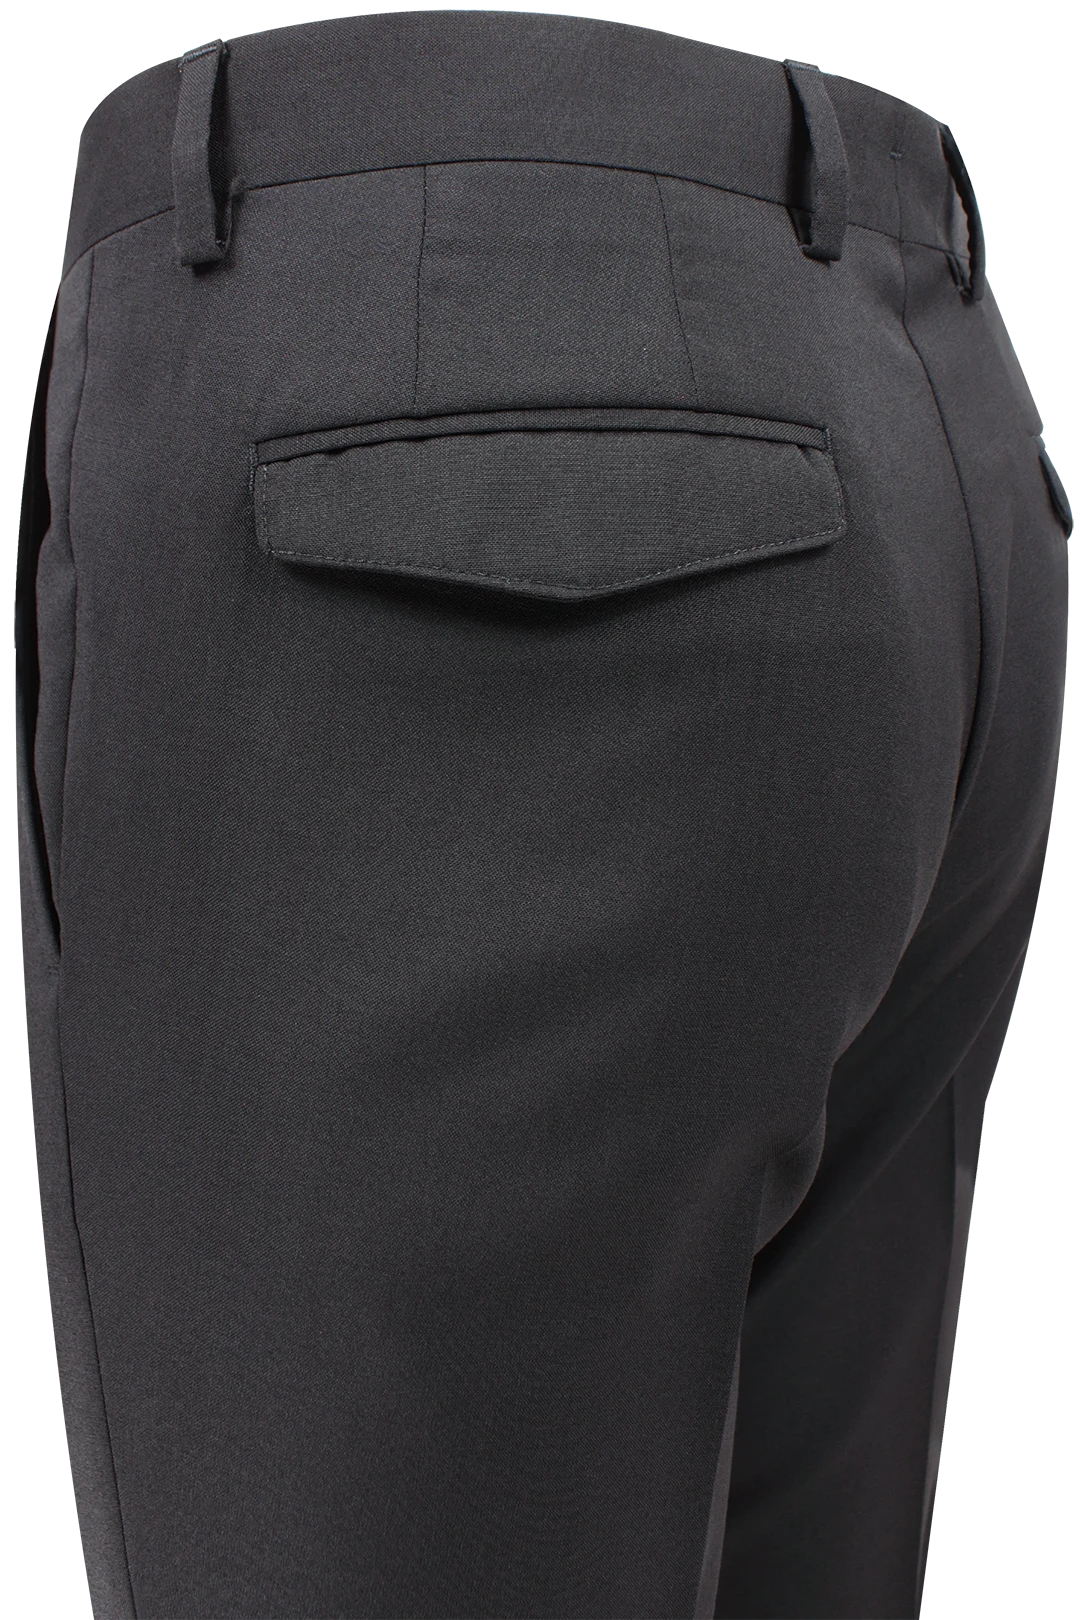 Pantalone con pince in tela di lana nera patta